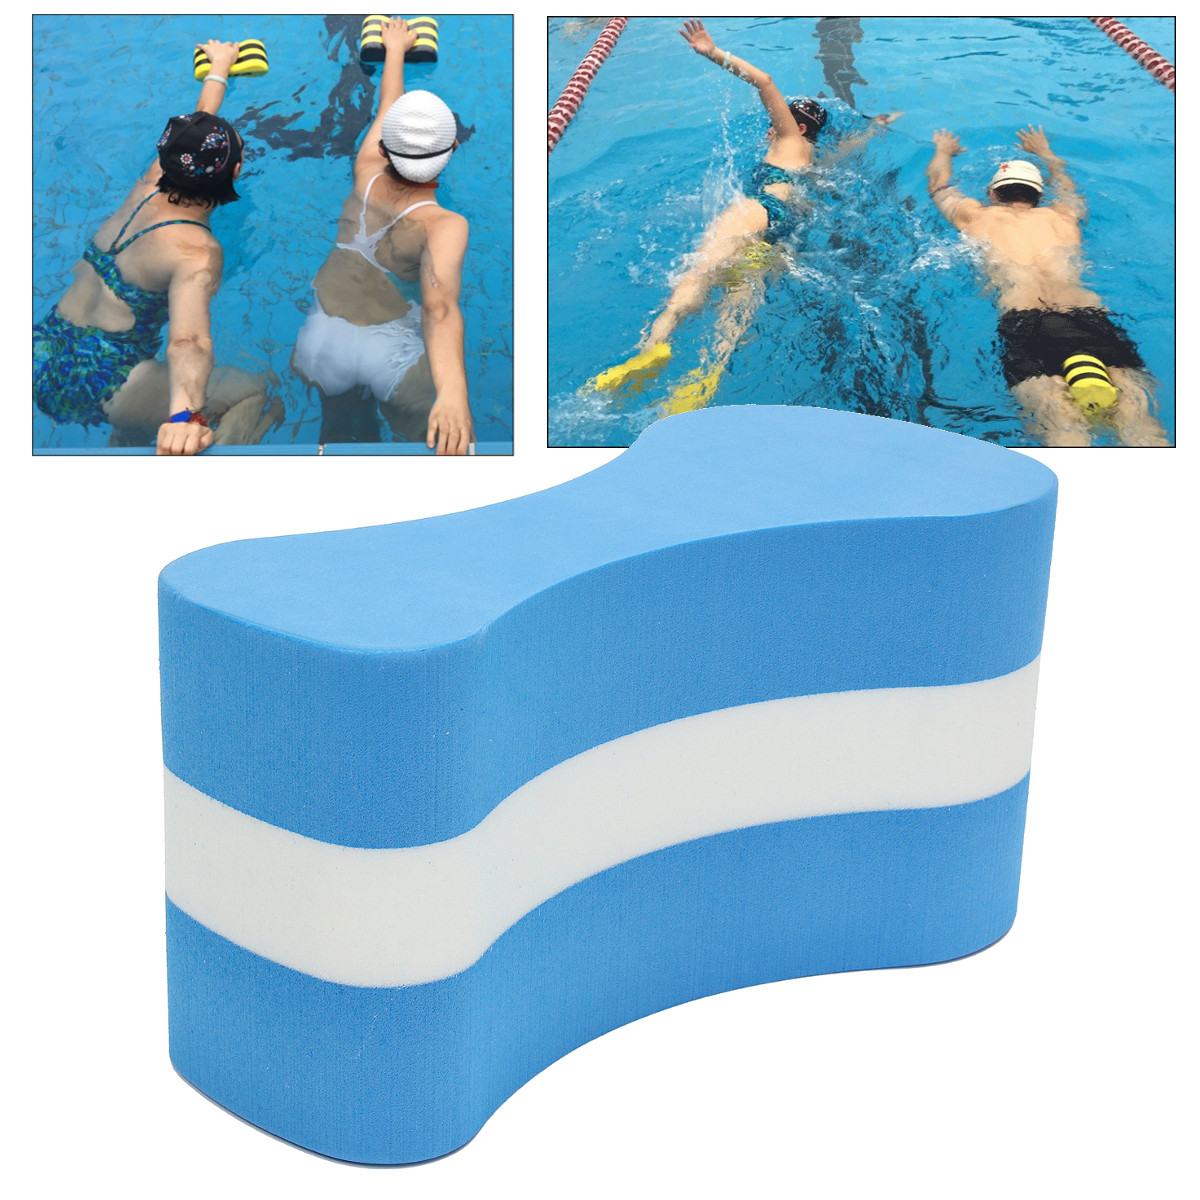 

Foam Pull Buoy Float Kickboard Kids Adults Pool Swimming Safety Training Aid